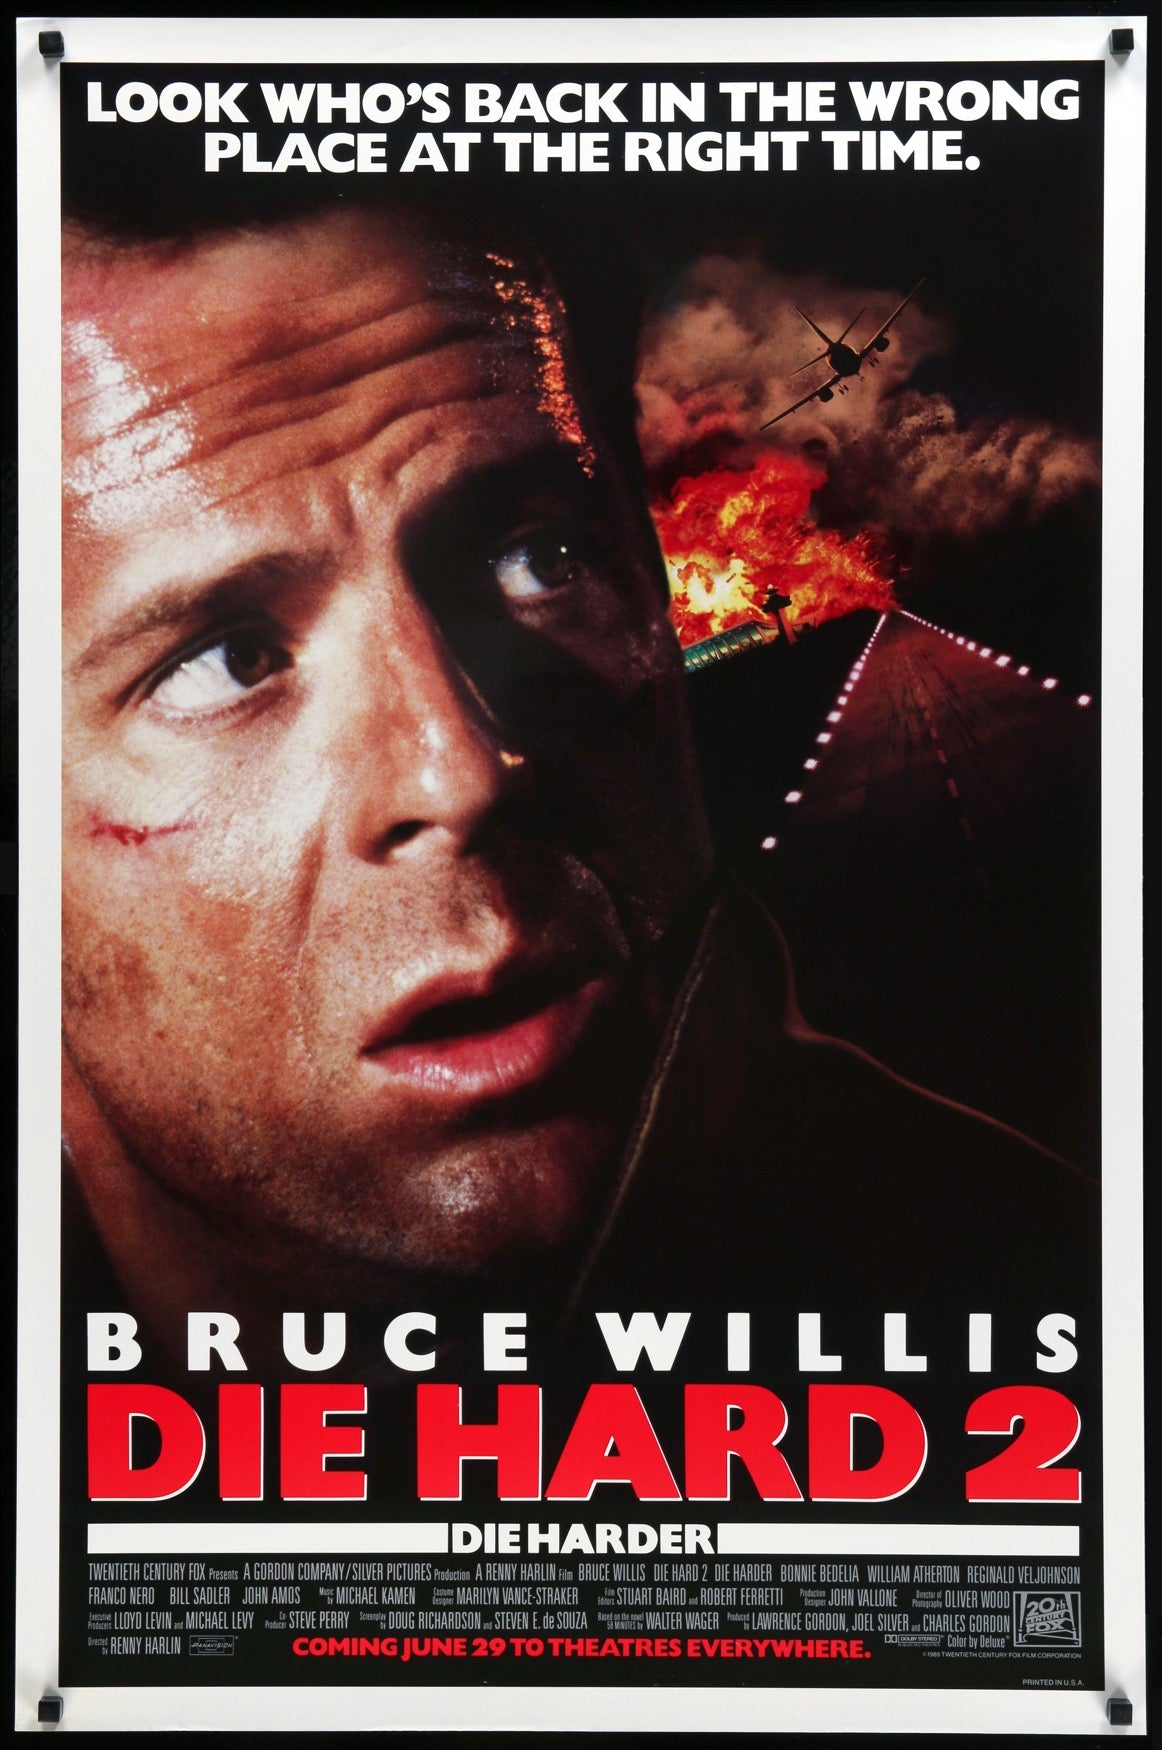 Die Hard 2 (1990) original movie poster for sale at Original Film Art